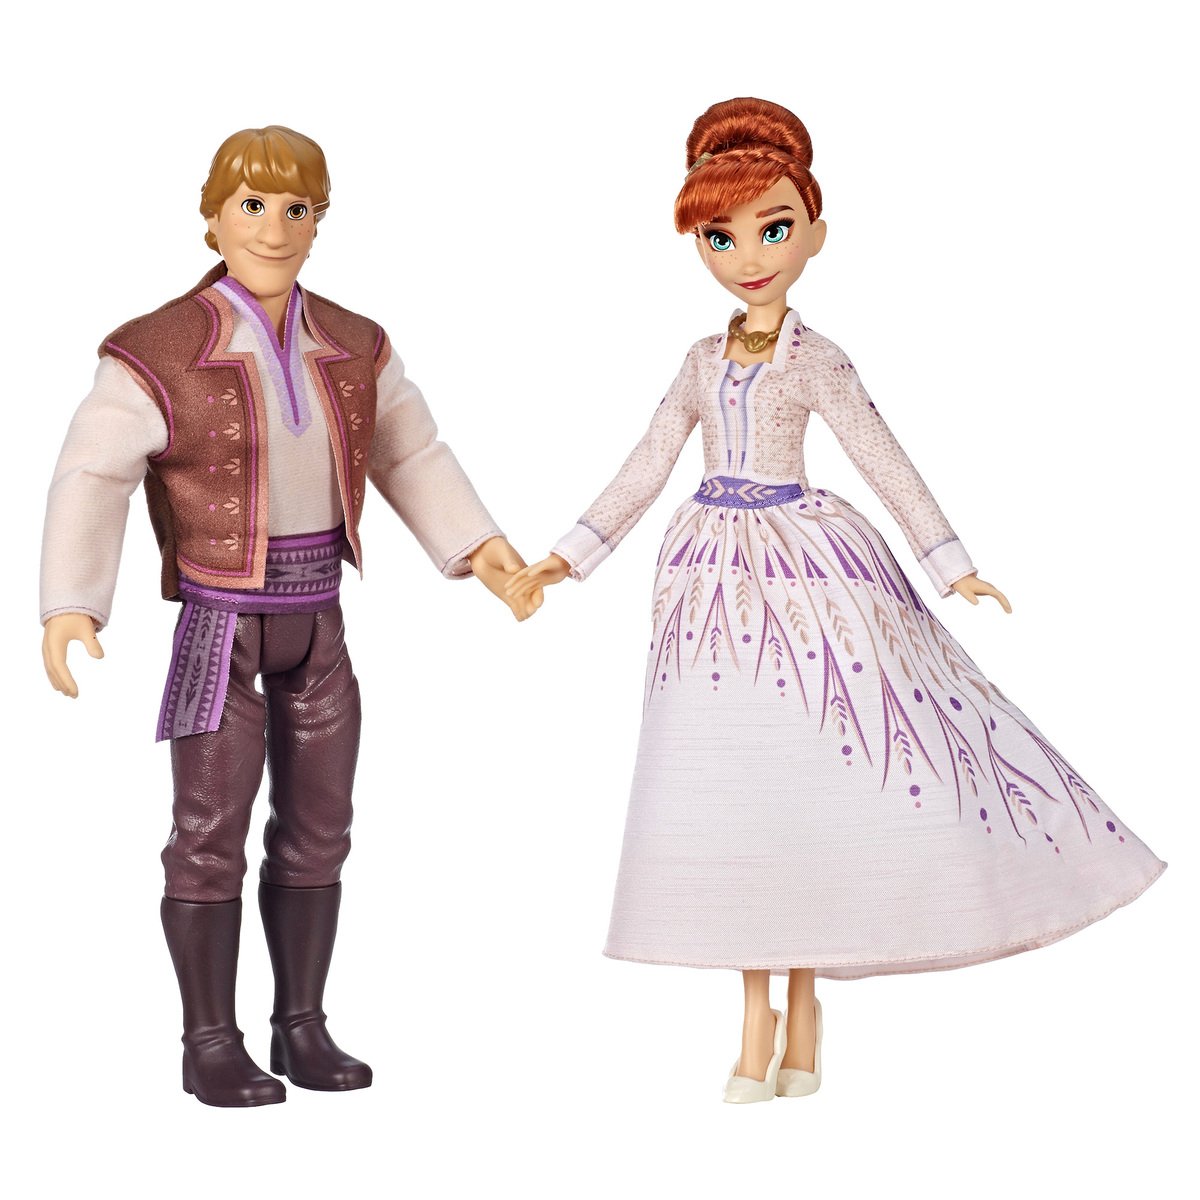 Disney Frozen-II Anna and Kristoff Fashion Dolls 2Pc Pack 12" E5502